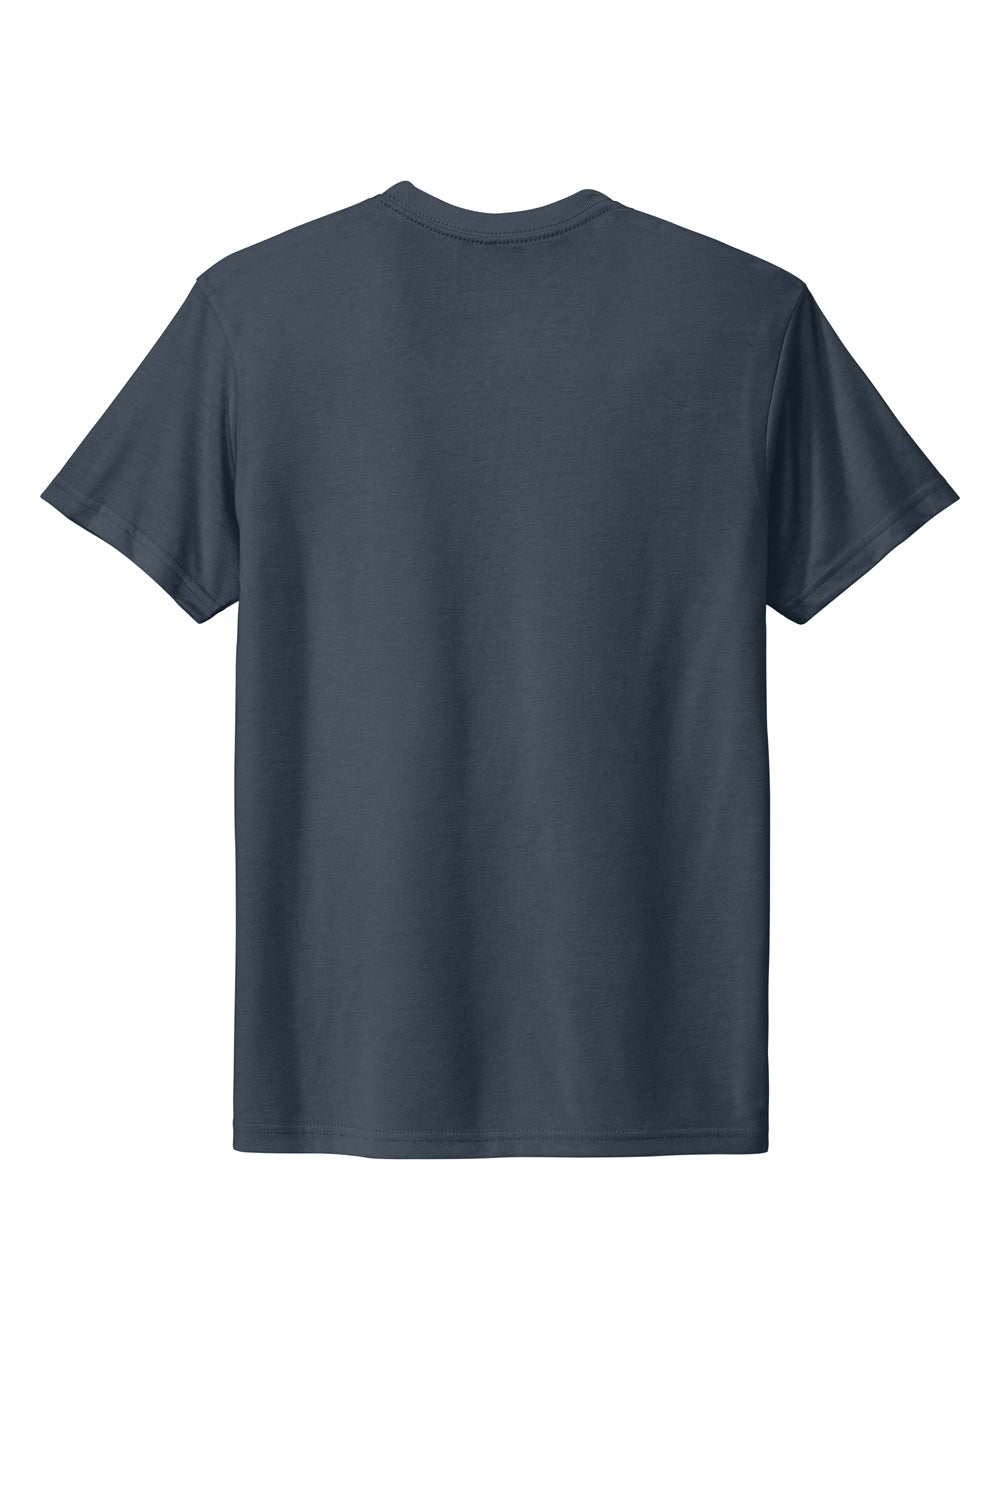 Next Level Mens Jersey Short Sleeve Crewneck T-Shirt Legion Blue Flat Back